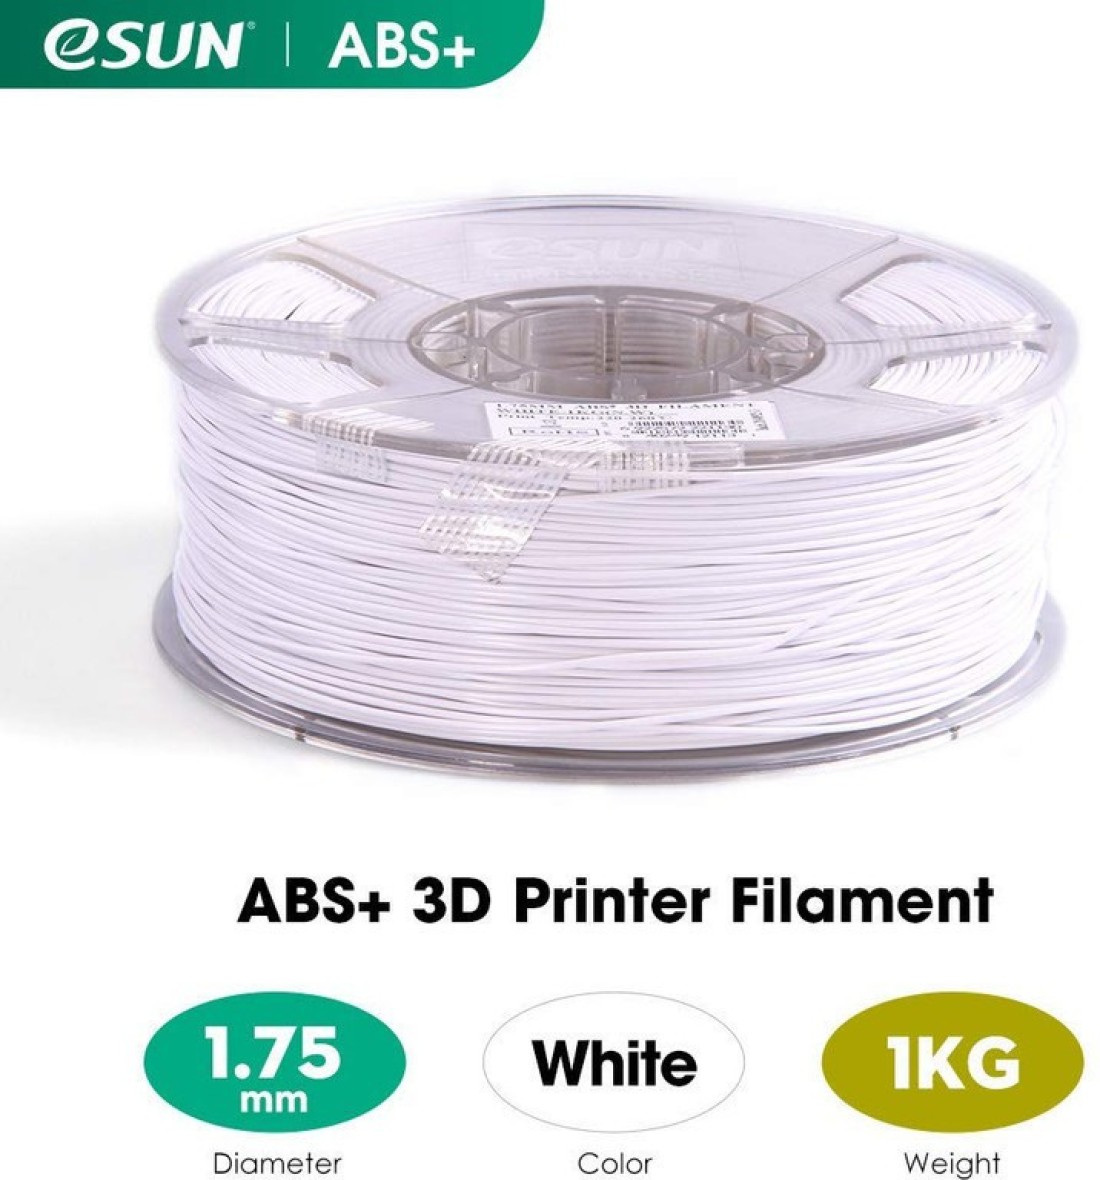 eSUN ABS+ Filament 1.75mm, ABS Plus 3D , Dimensional Accuracy +/- 0.05mm,  1KG (2.2 LBS) Spool 3D Printing Filament for 3D Printers, White Printer  Filament Price in India - Buy eSUN ABS+